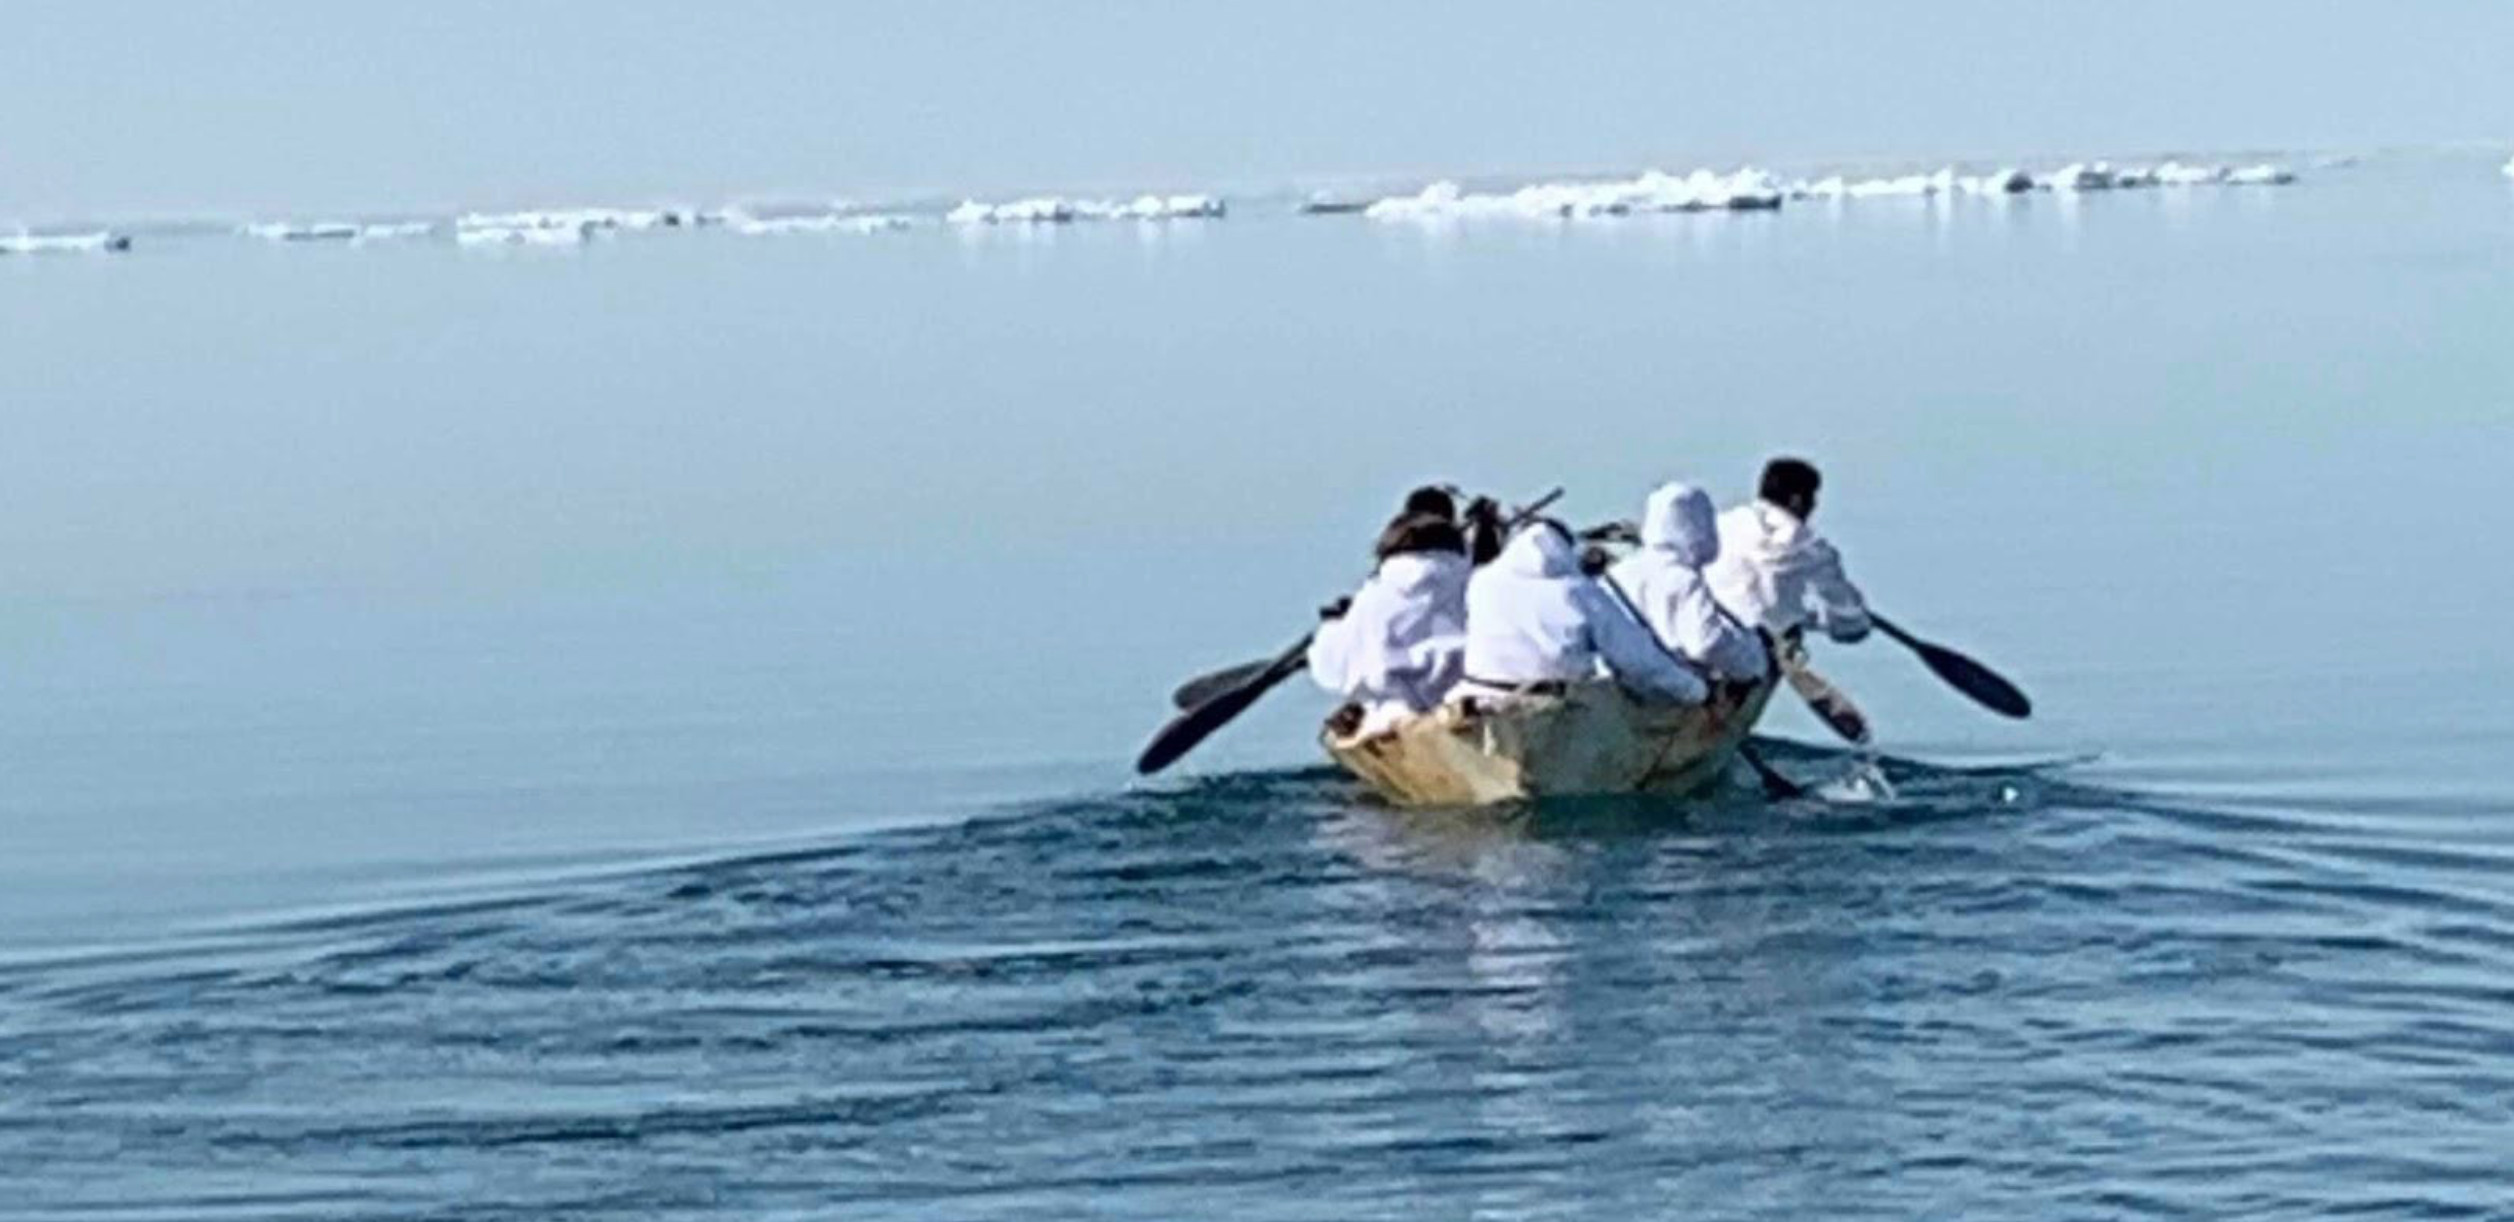 Gordon Iakyuak Brower’s whaling crew paddling their umiaq/seal skin boat out on the open water near the Arctic coastal village of Utqiaġvik, Alaska. Photo: Courtesy of Gordon Ikayuak Brower